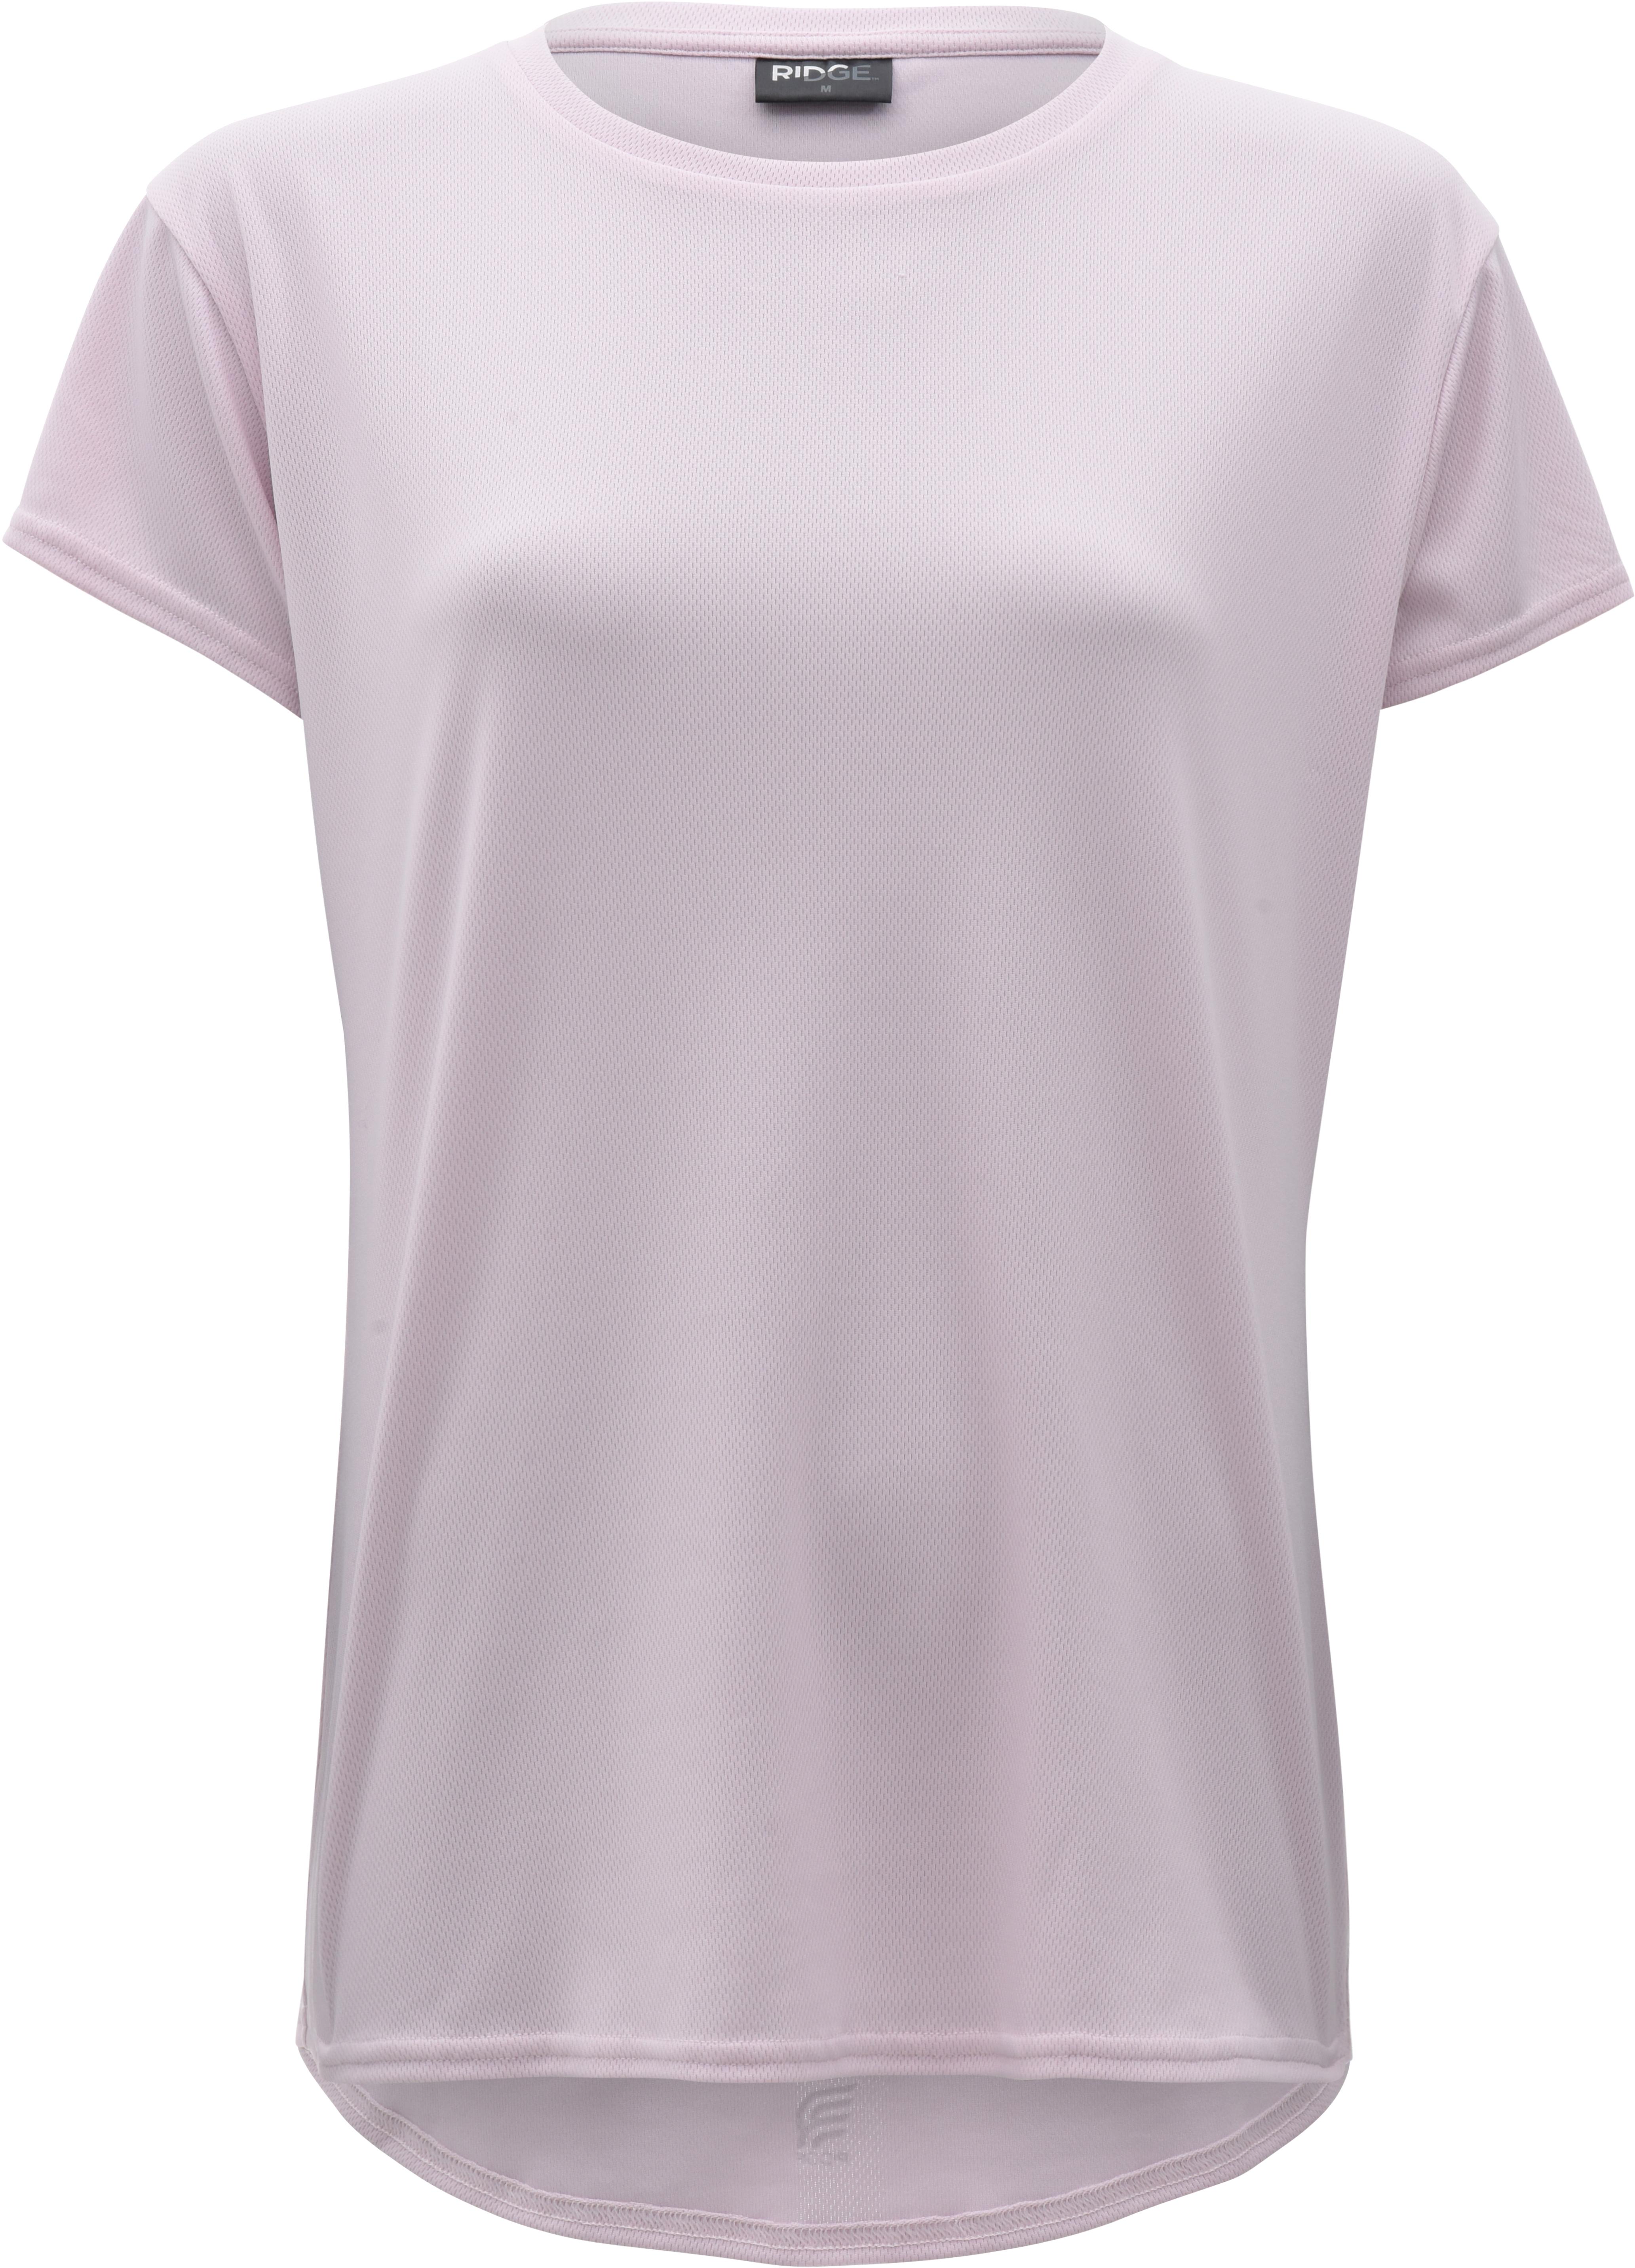 Ridge Womens Cycling T Shirt - Pink Large